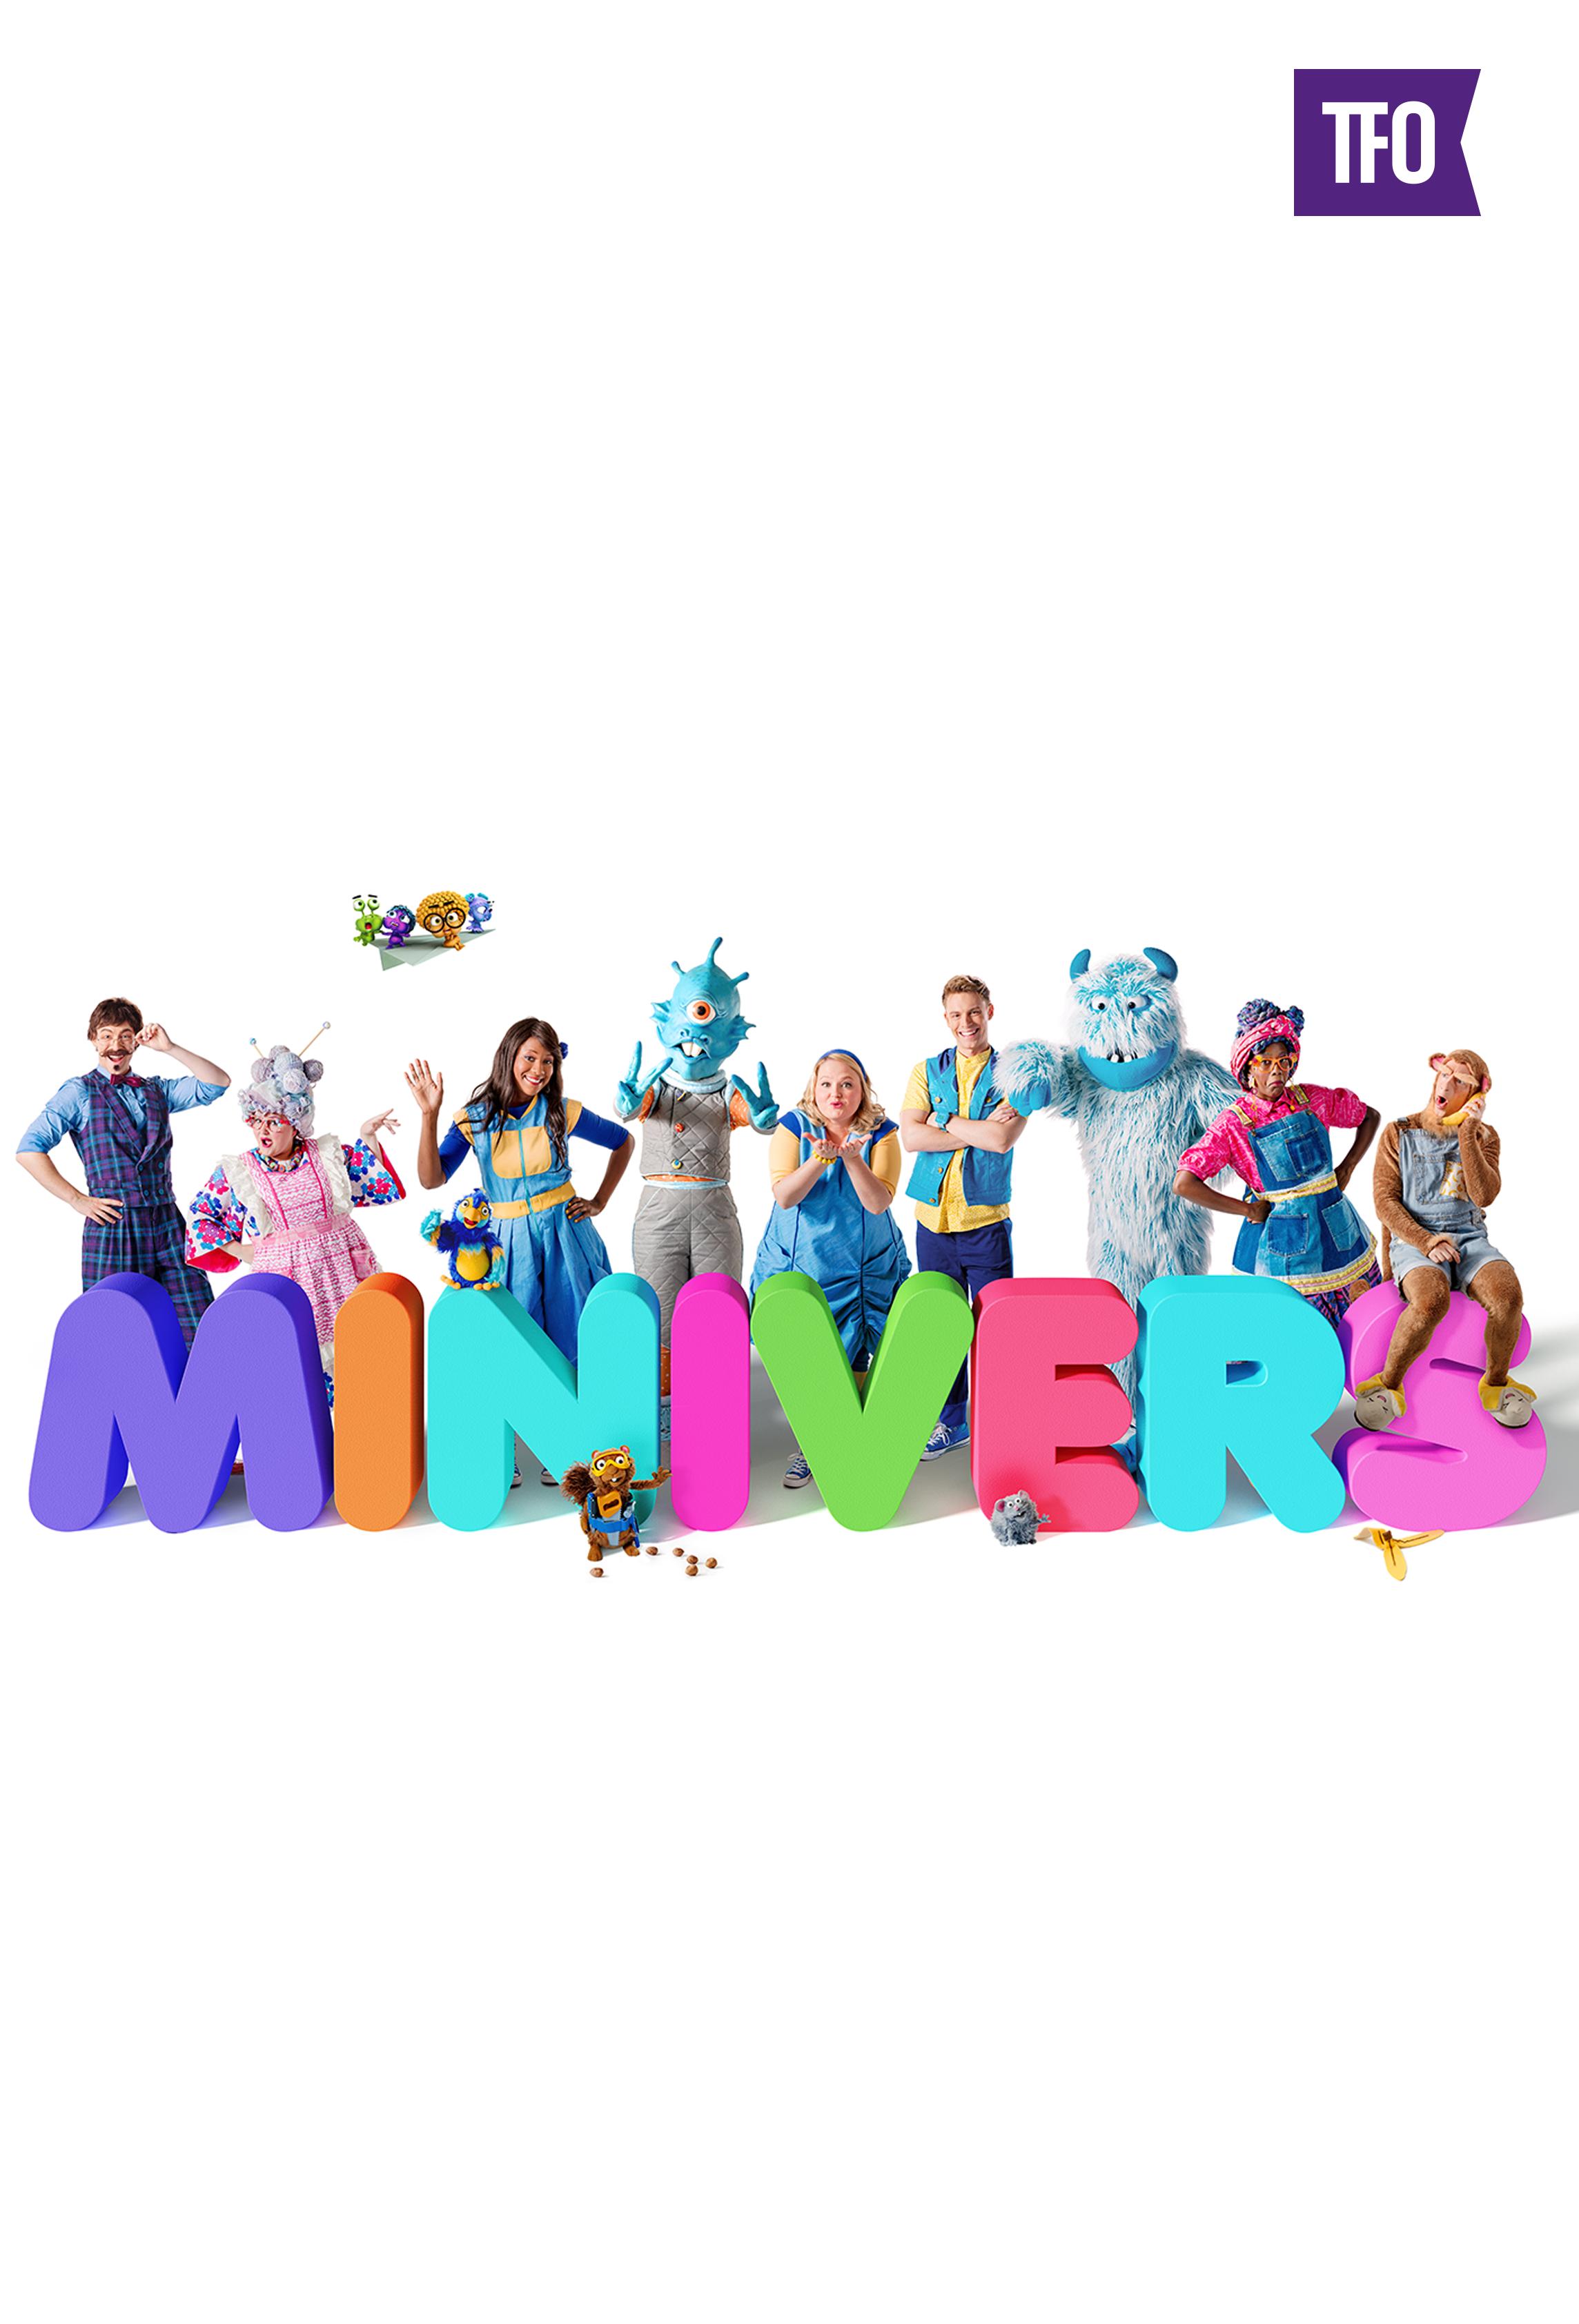 Minivers